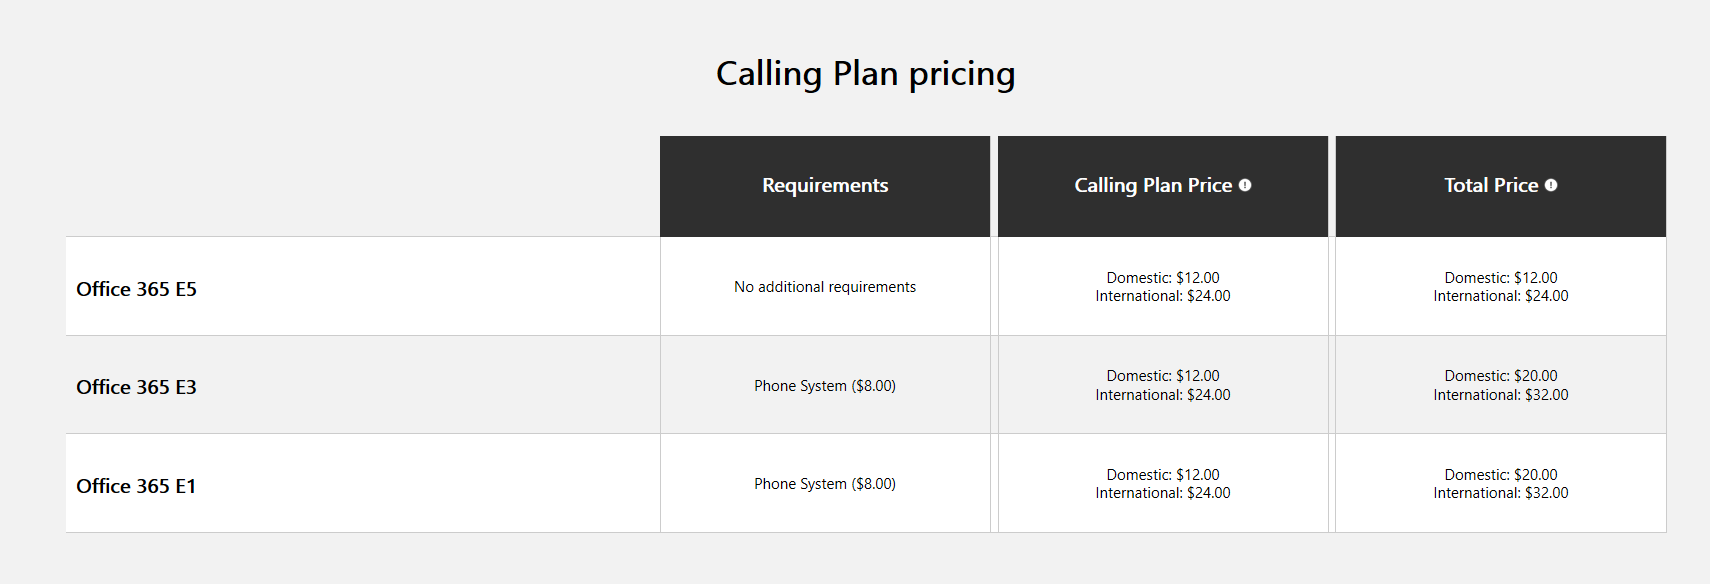 Microsoft Calling Plan Pricing Table